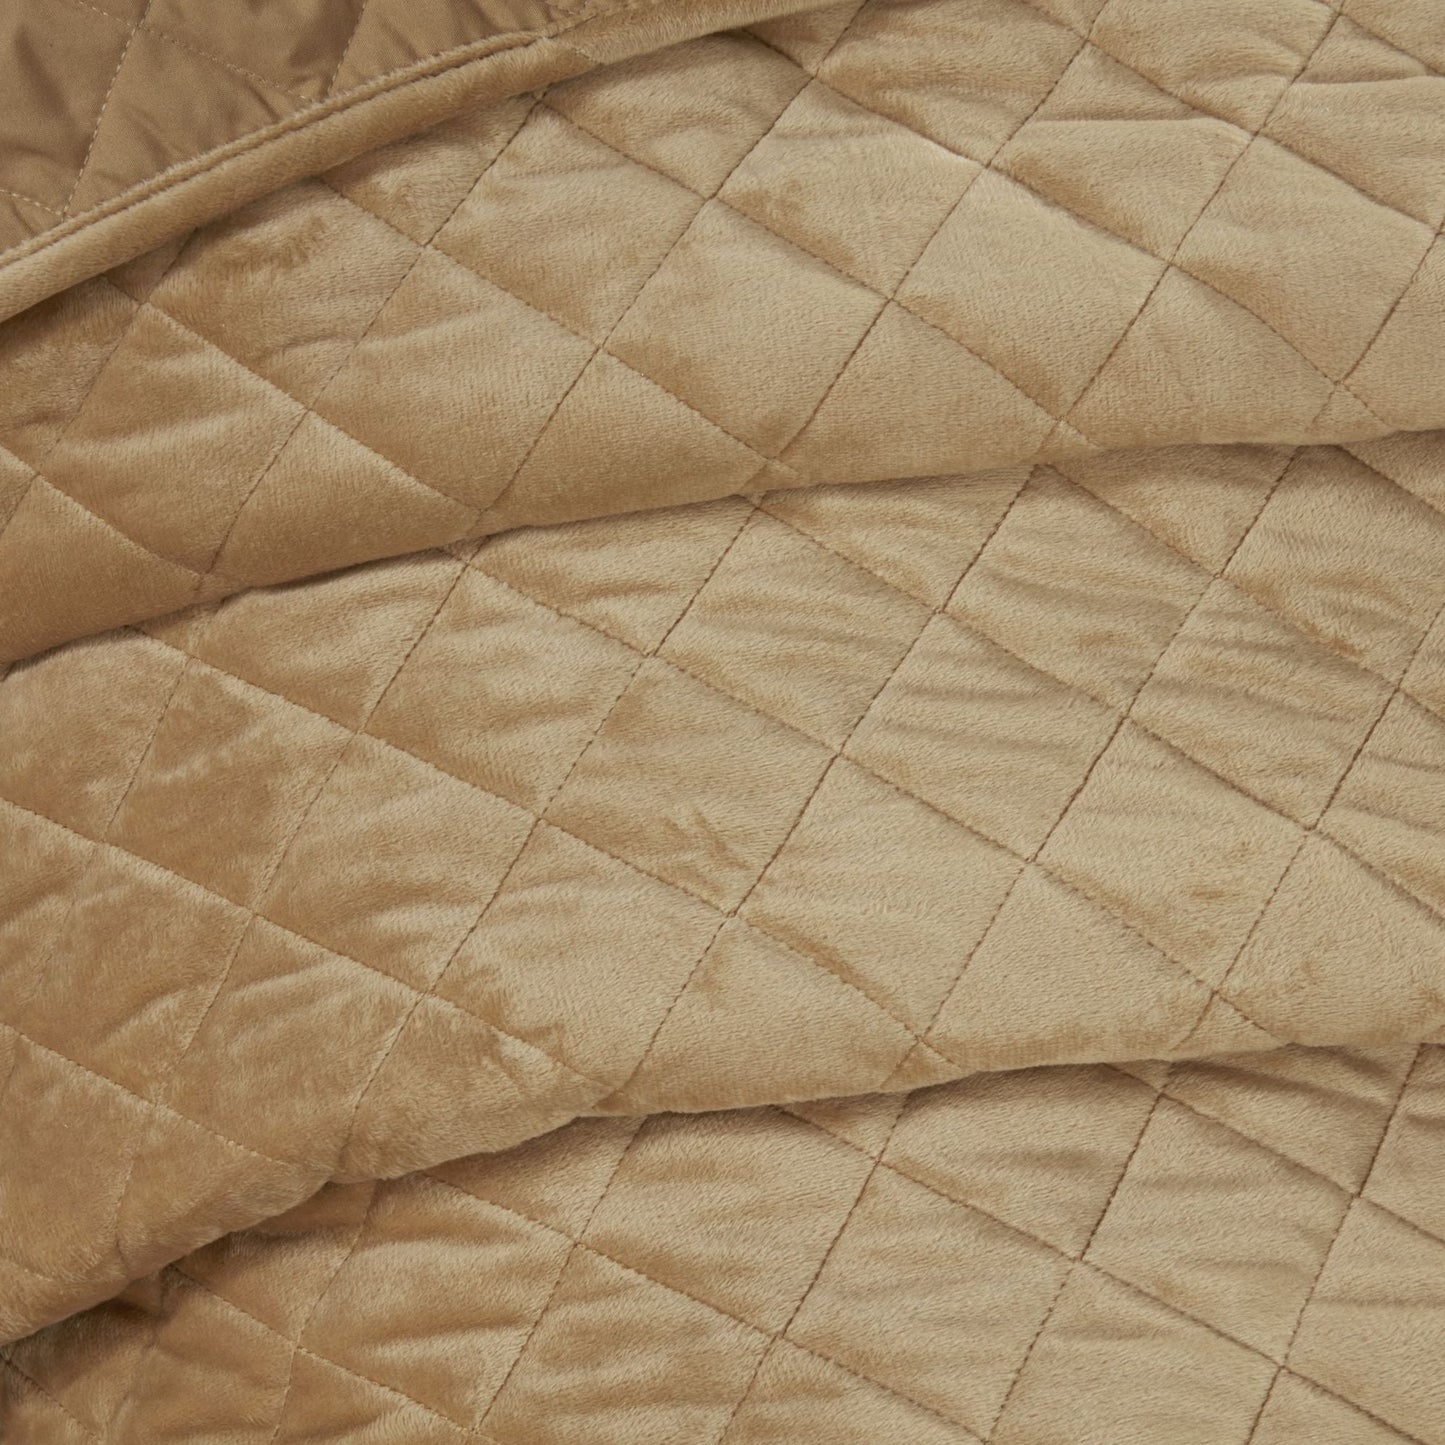 Regent Ochre Quilted Soft Touch Velvet Bedspread Set